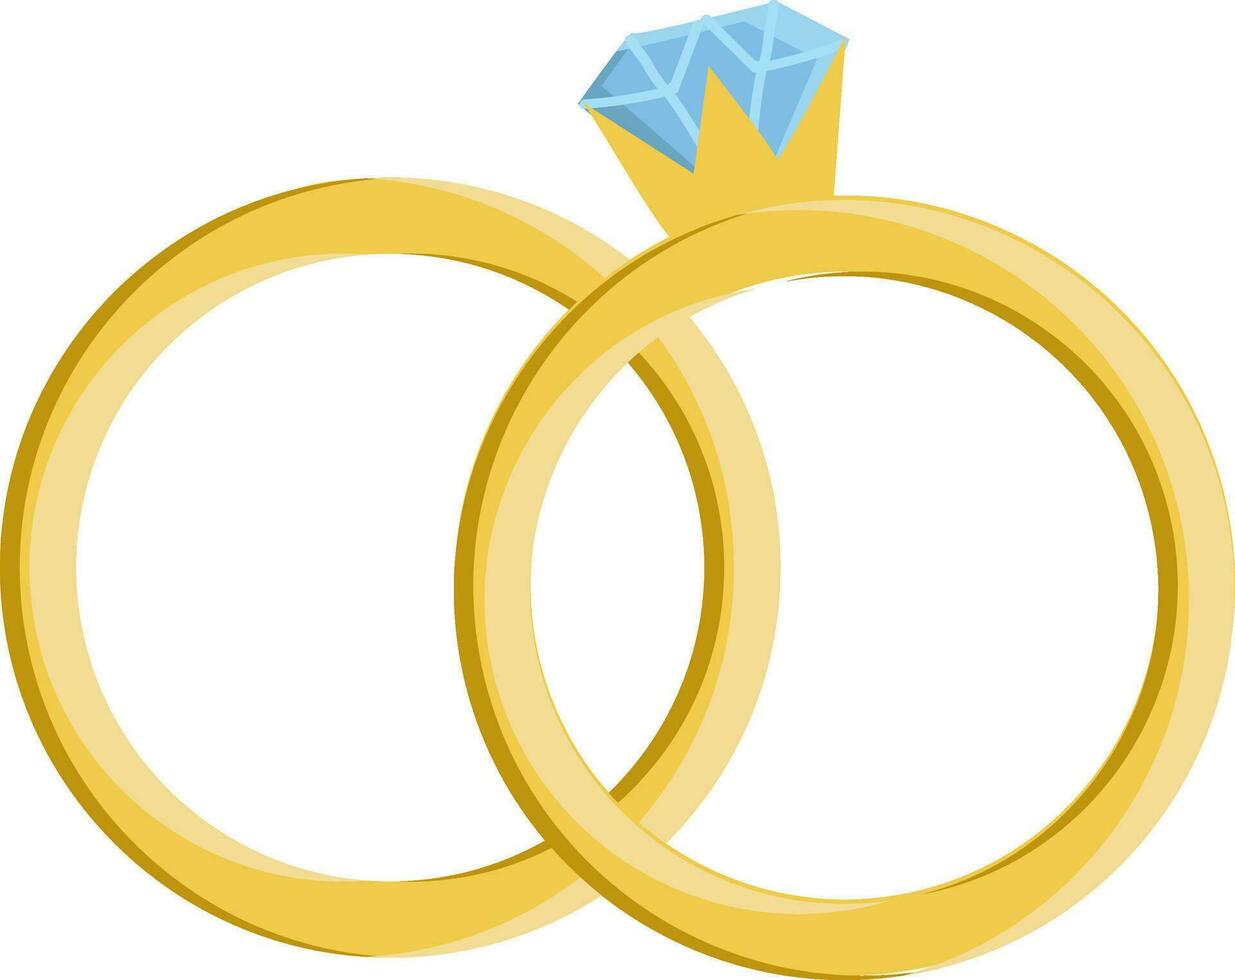 Wedding rings hand drawn design, illustration, vector on white background.